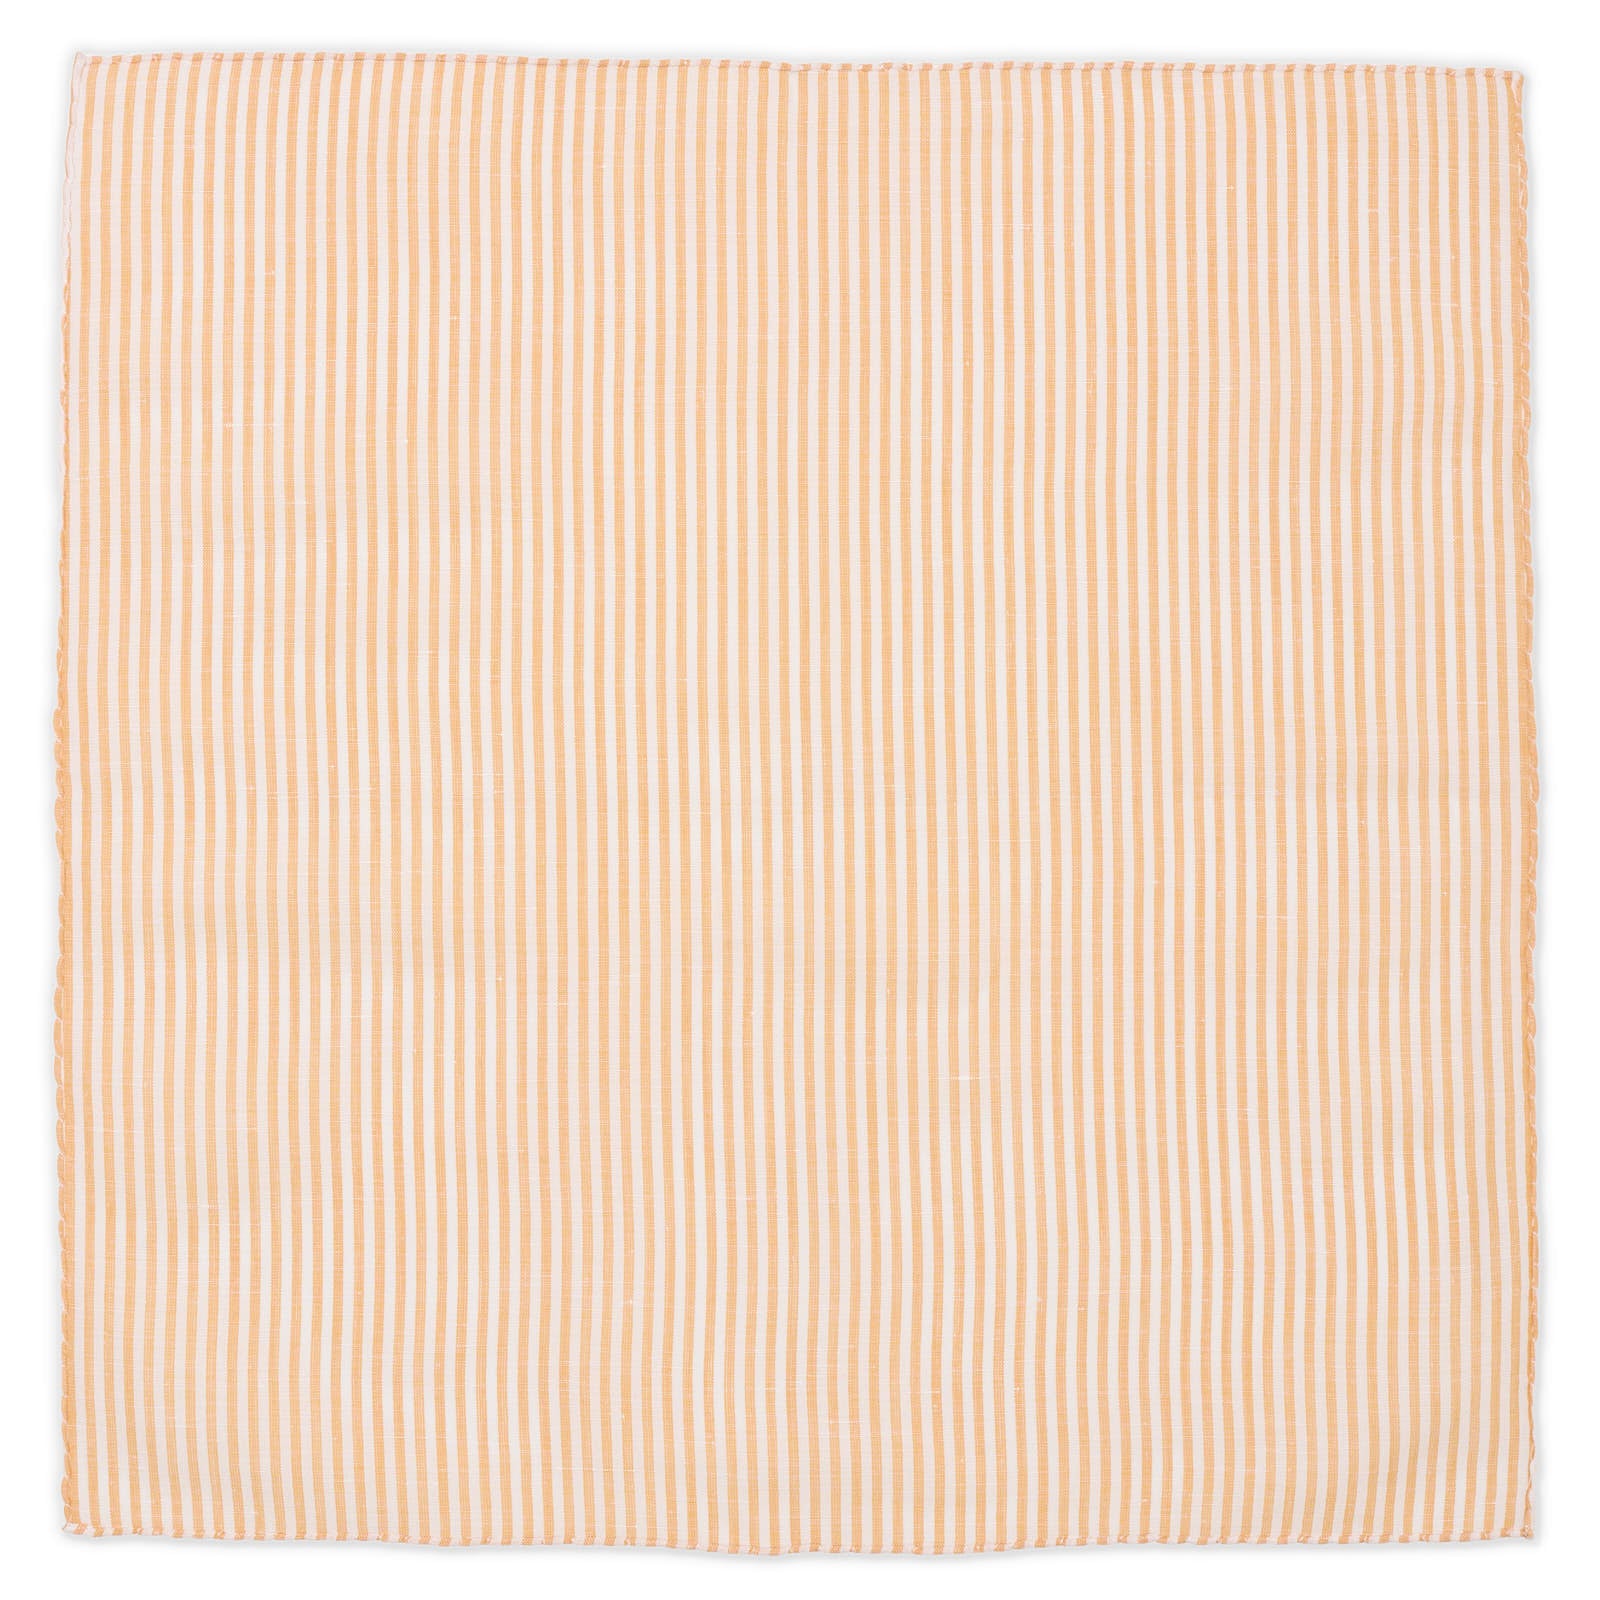 VANNUCCI Milano Handmade Orange-White Striped Cotton Pocket Square NEW 33cm x 33cm